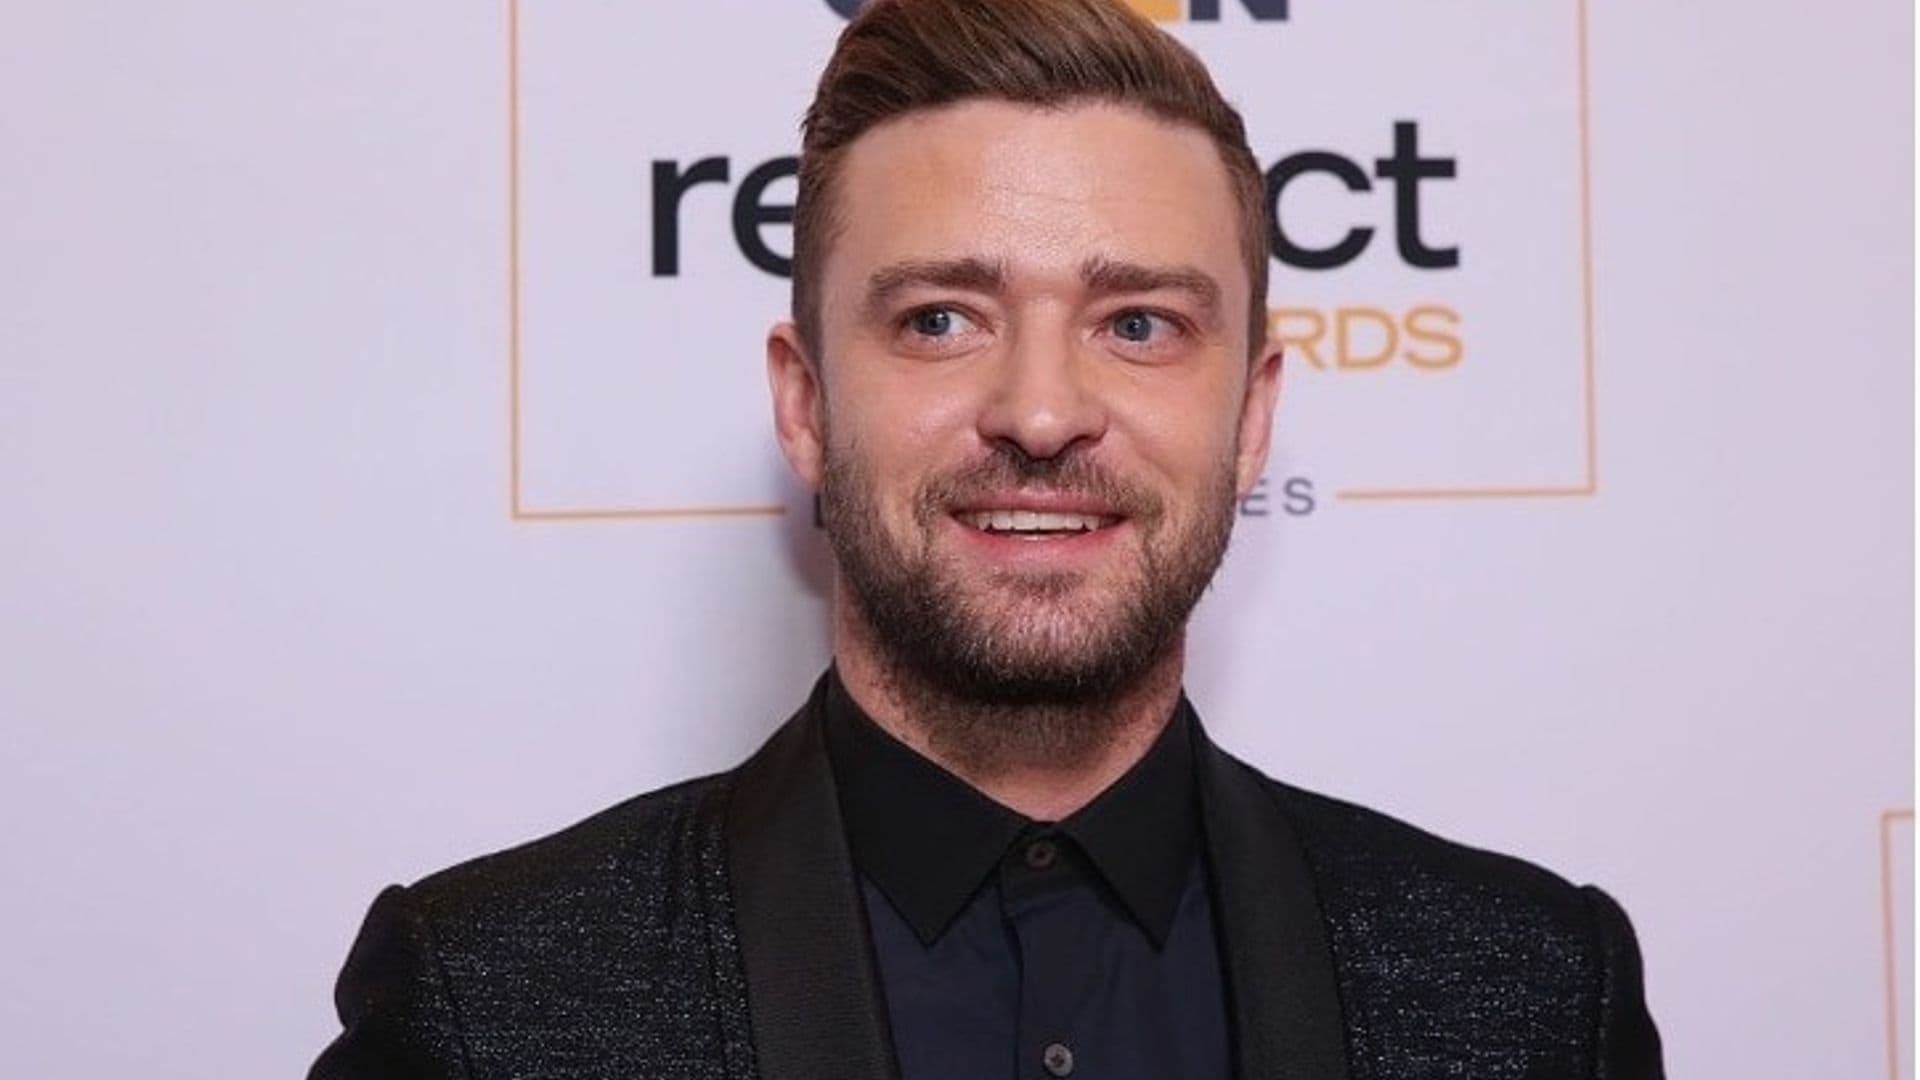 Justin Timberlake set to perform at the CMA Awards with Chris Stapleton